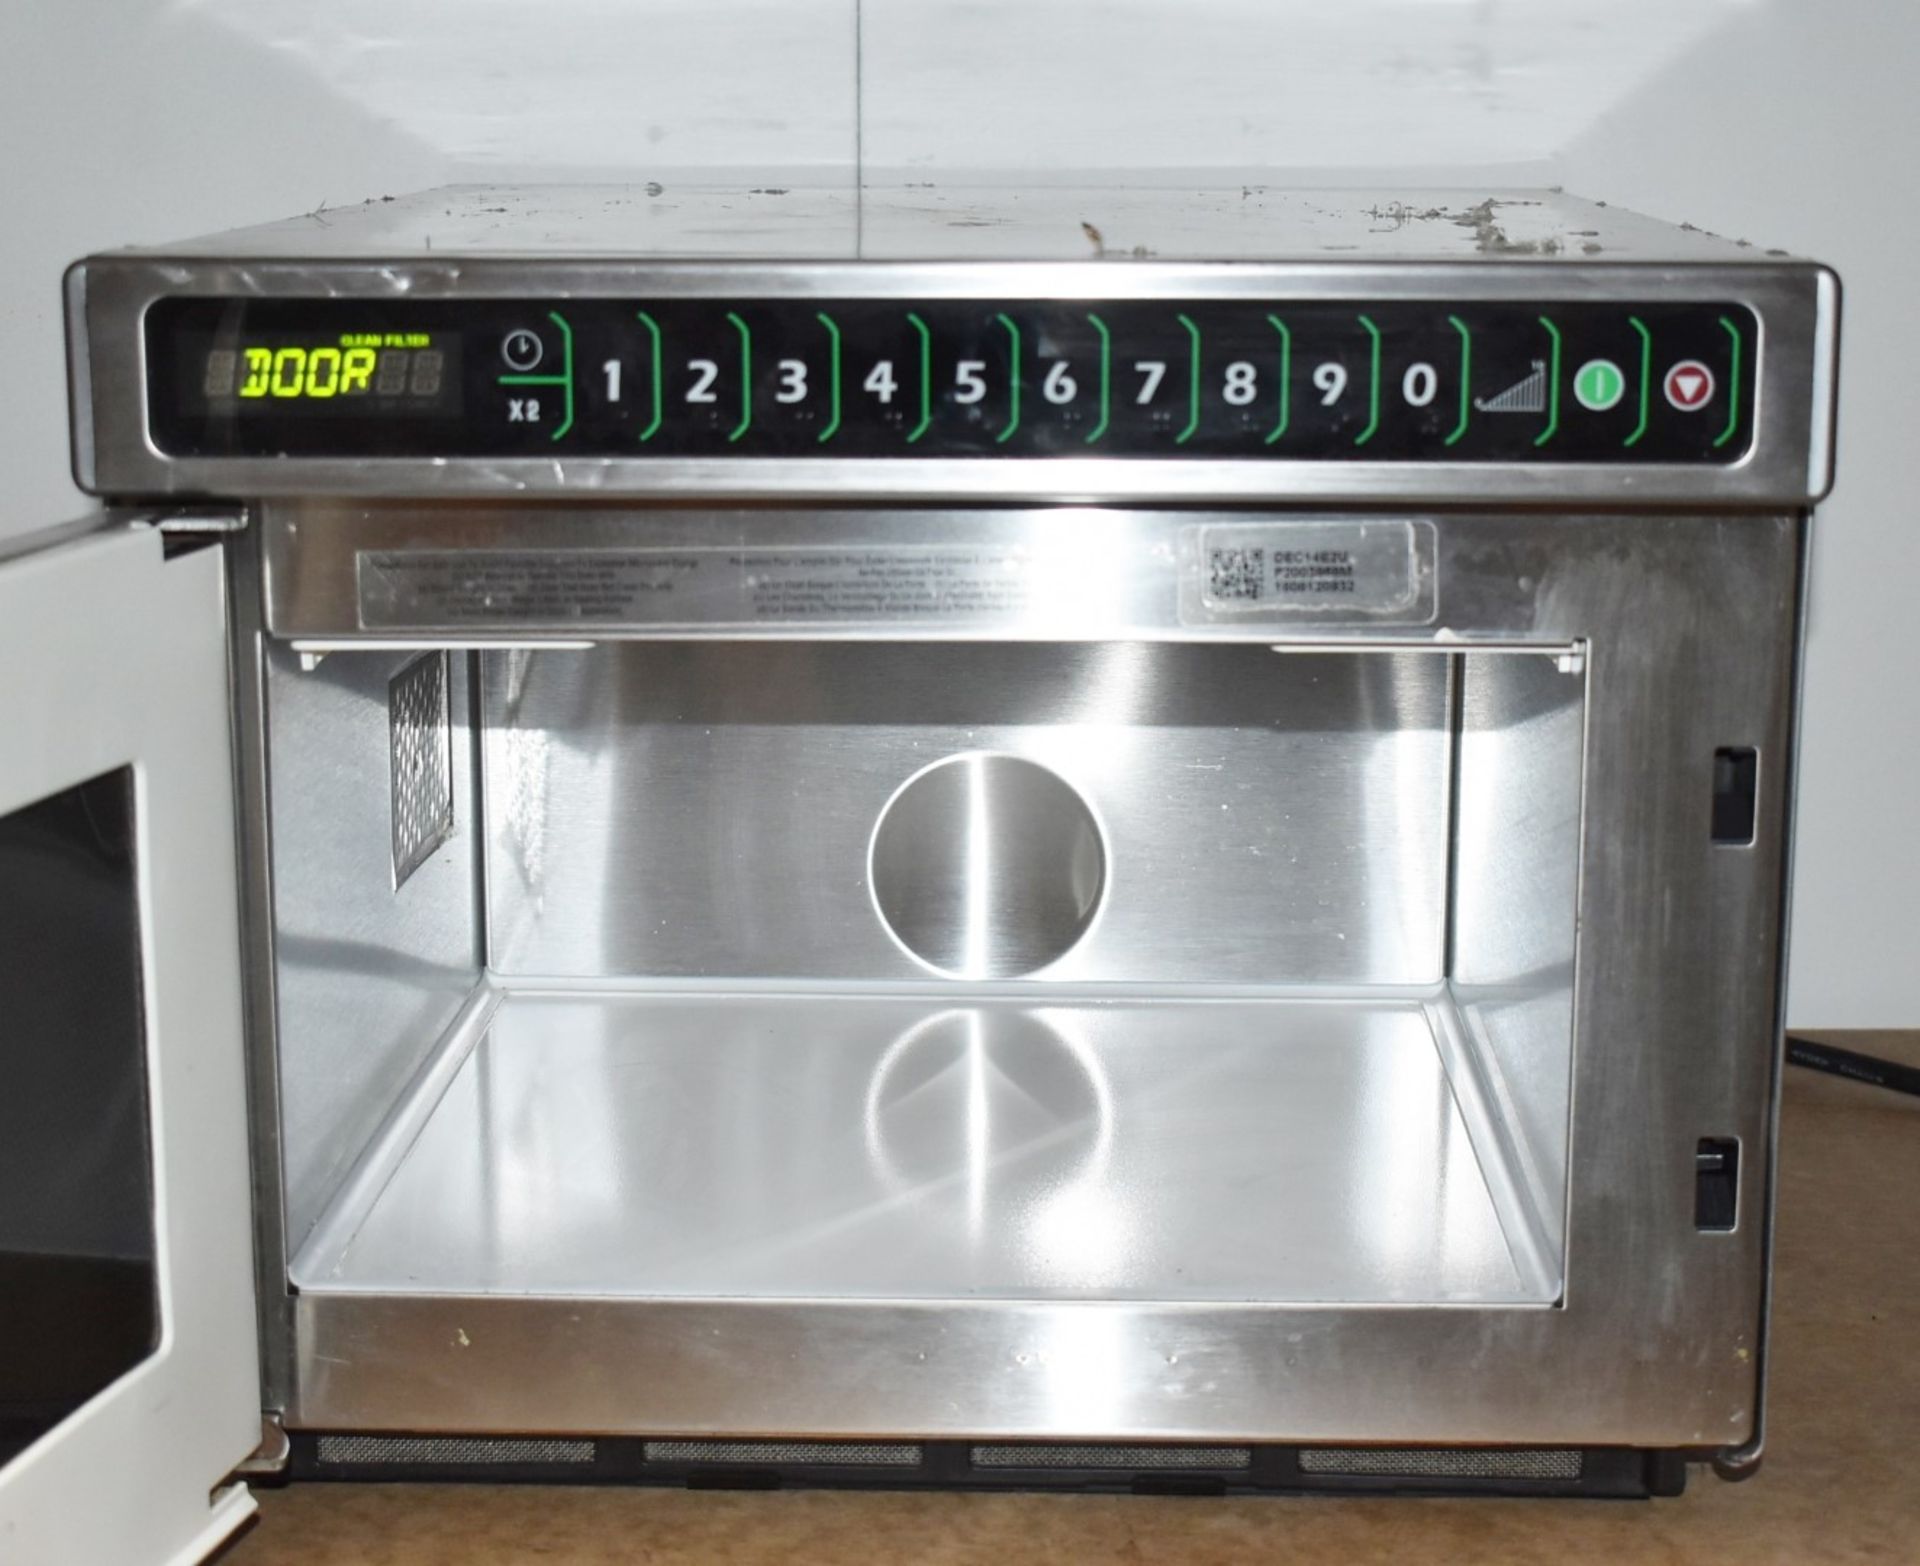 1 x Menumaster Commercial Microwave Oven - Model DEC14E2U - 1.4kW, 13A, 17Ltr - 2018 Model - - Image 8 of 12